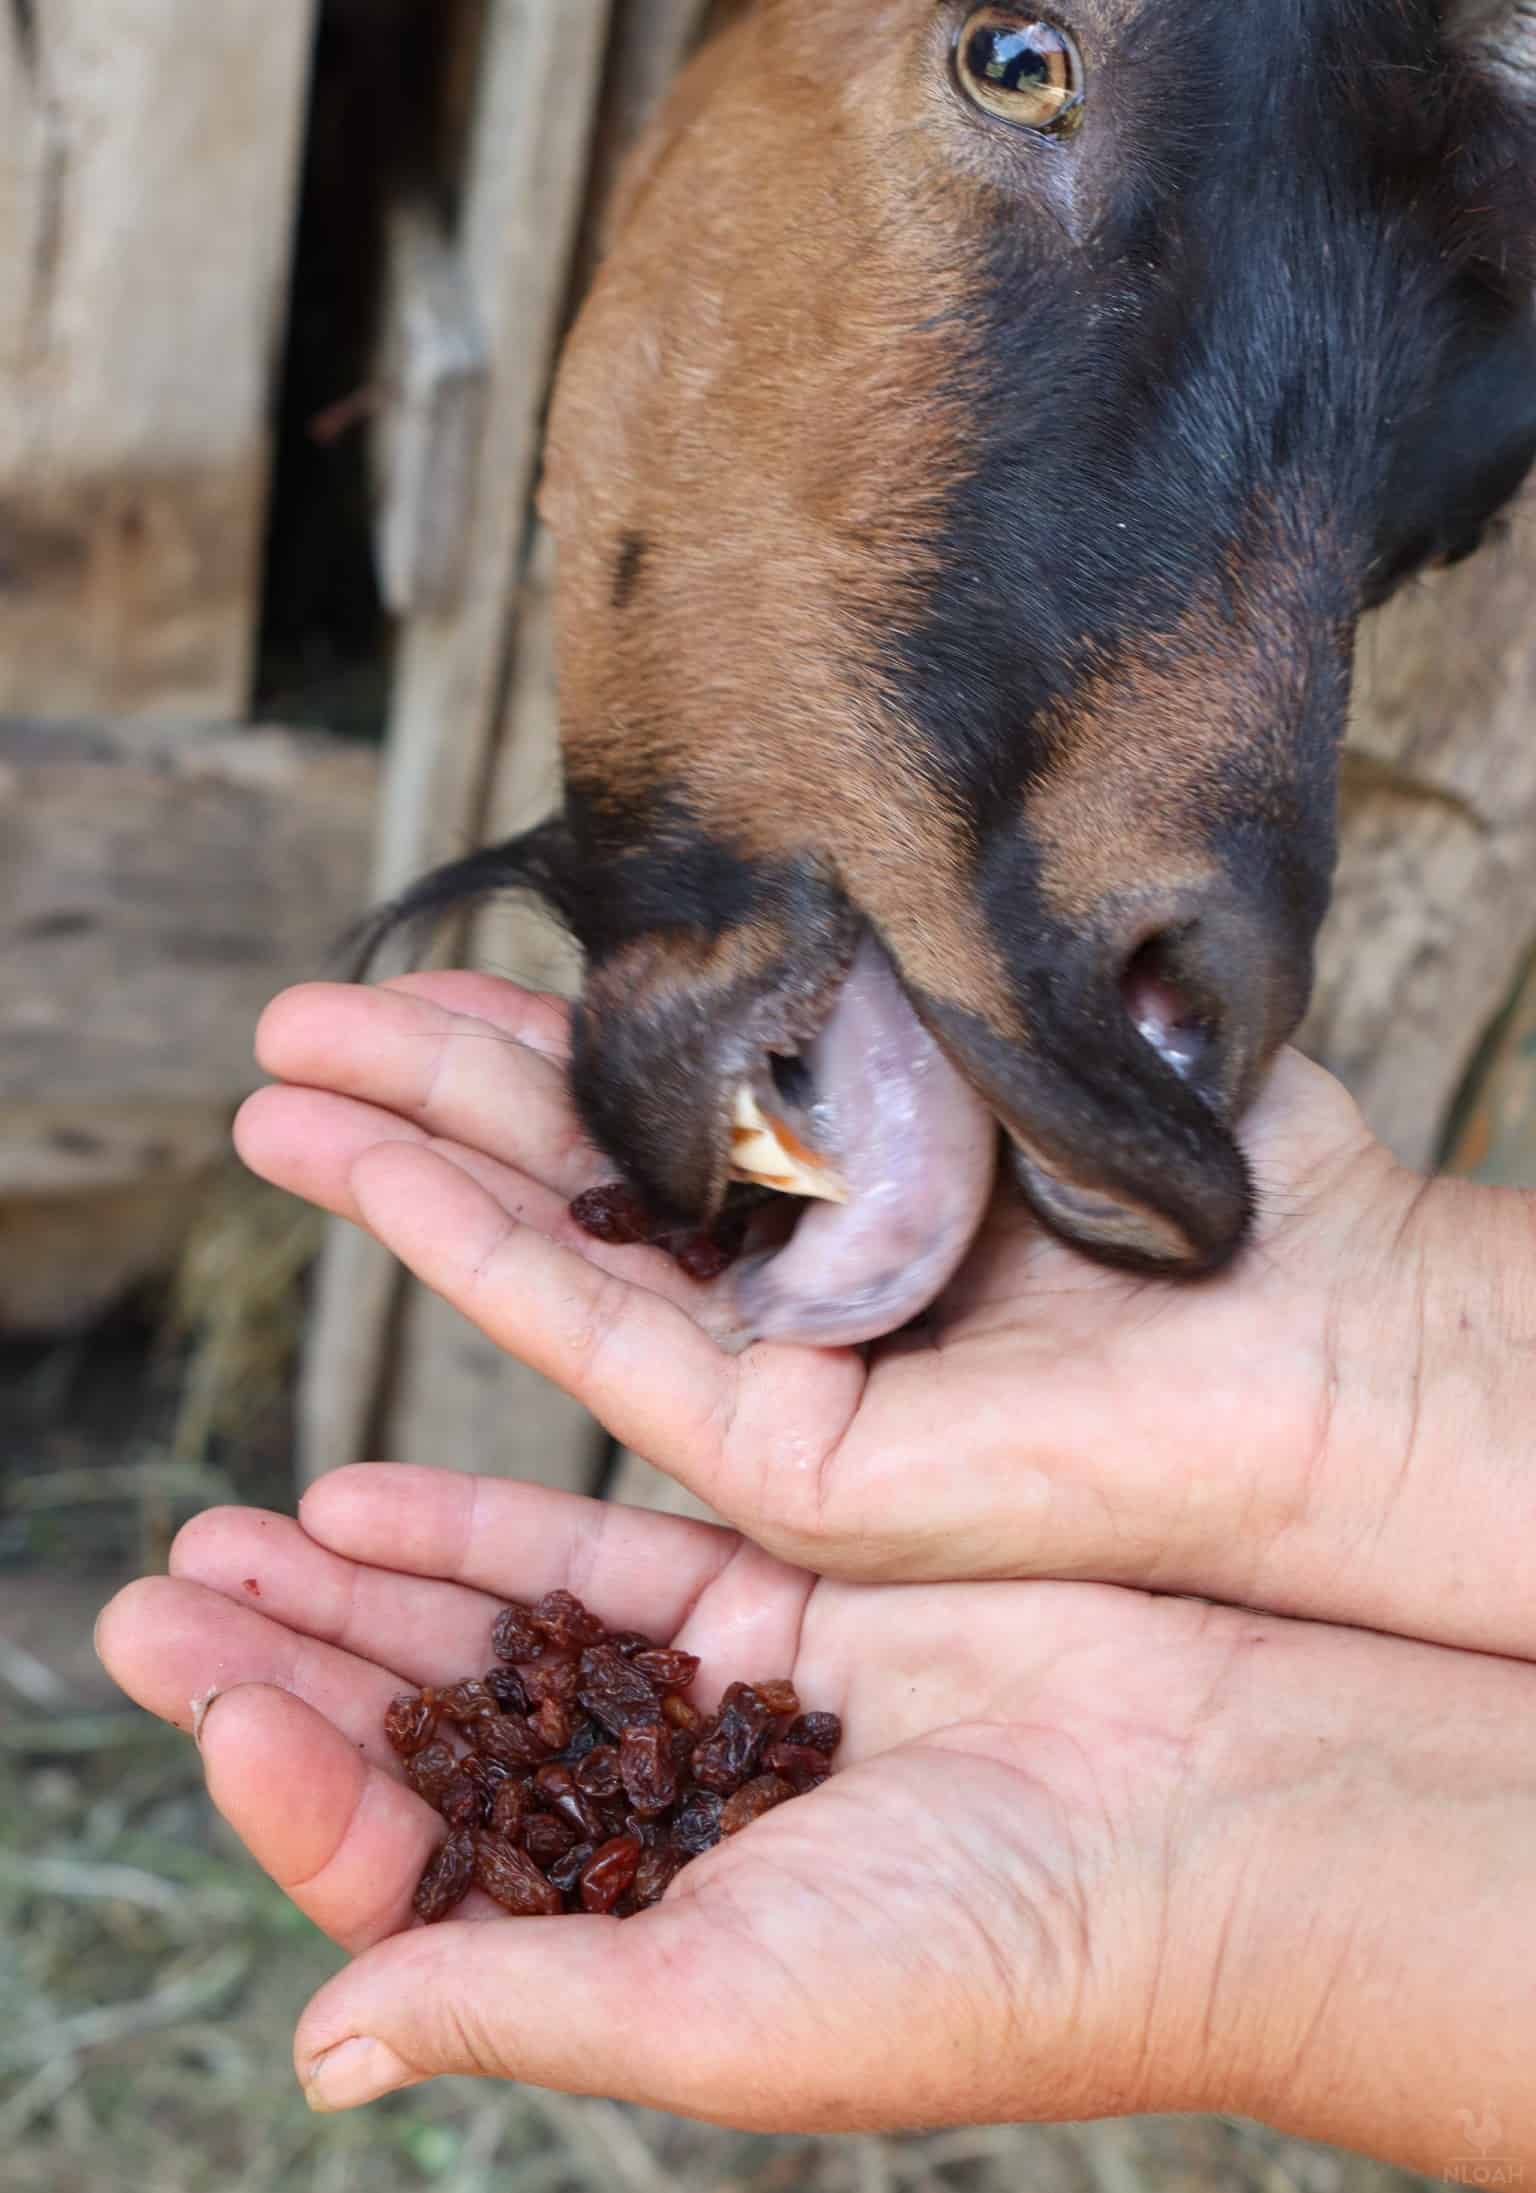 a goat eating raisins